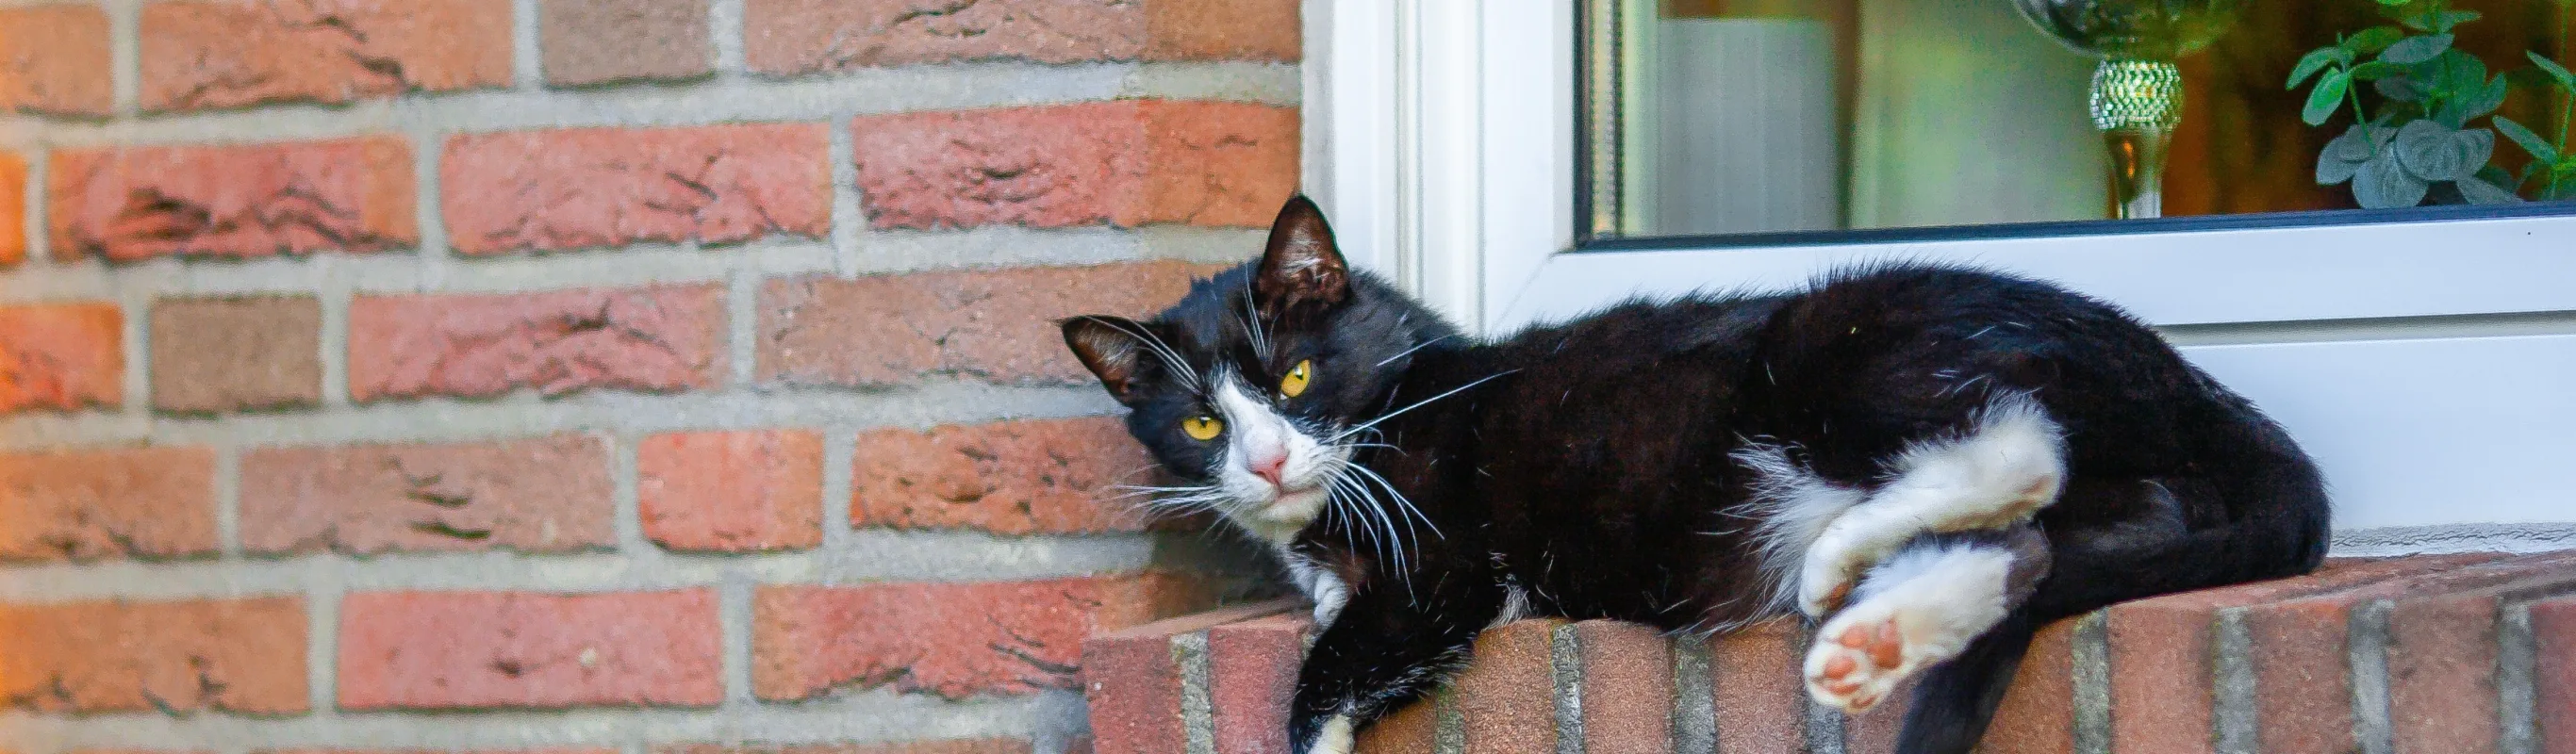 Black cat on a brick window